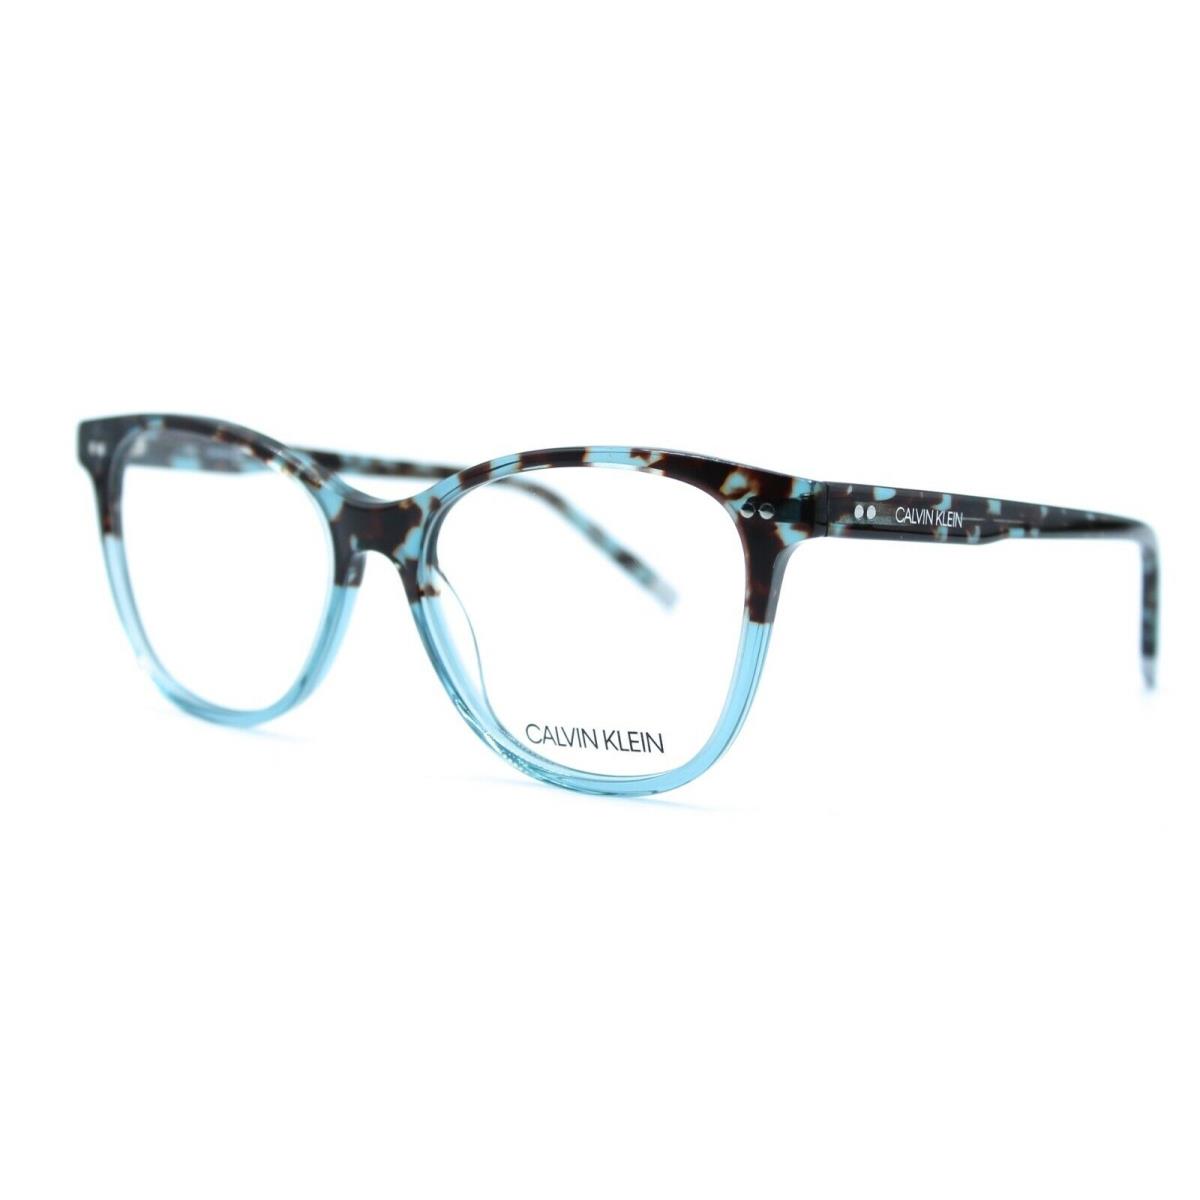 Calvin Klein - CK5990 426 53/16/140 - Tort Turquoise - Eyeglasses ...